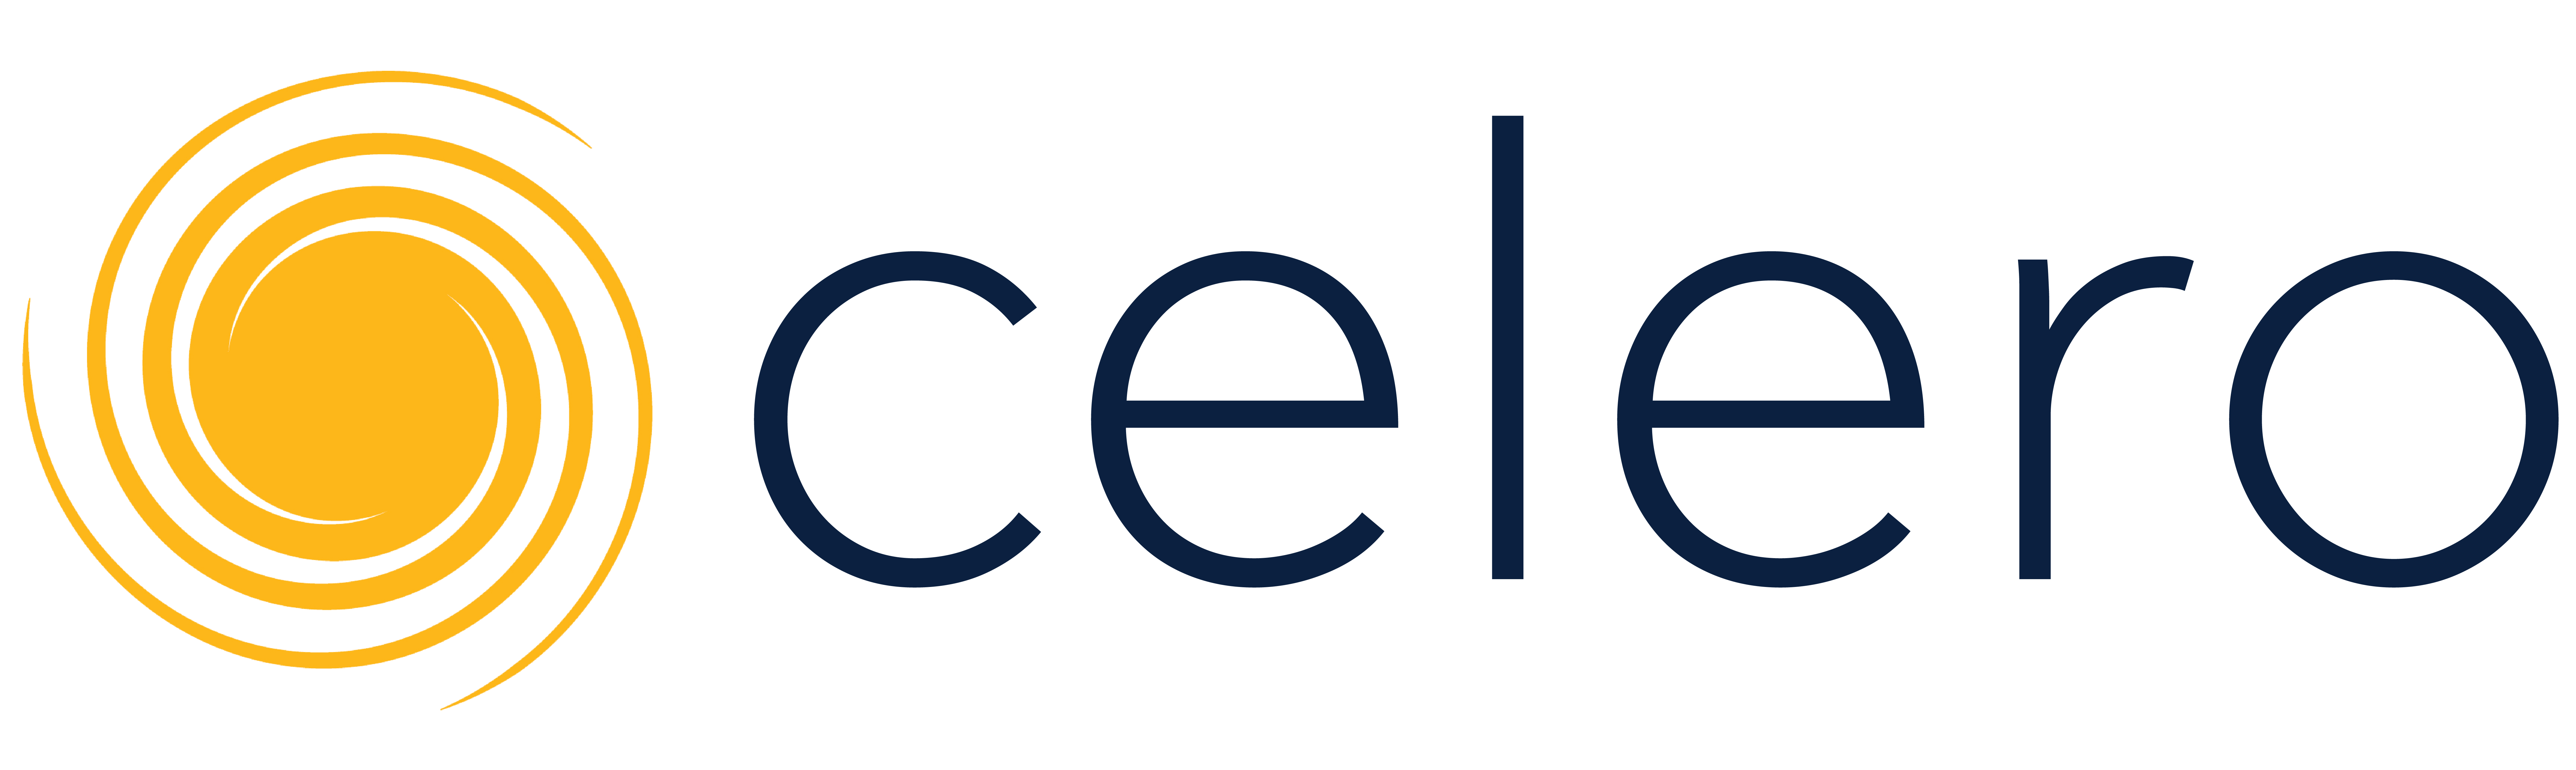 Celero Logo Brand